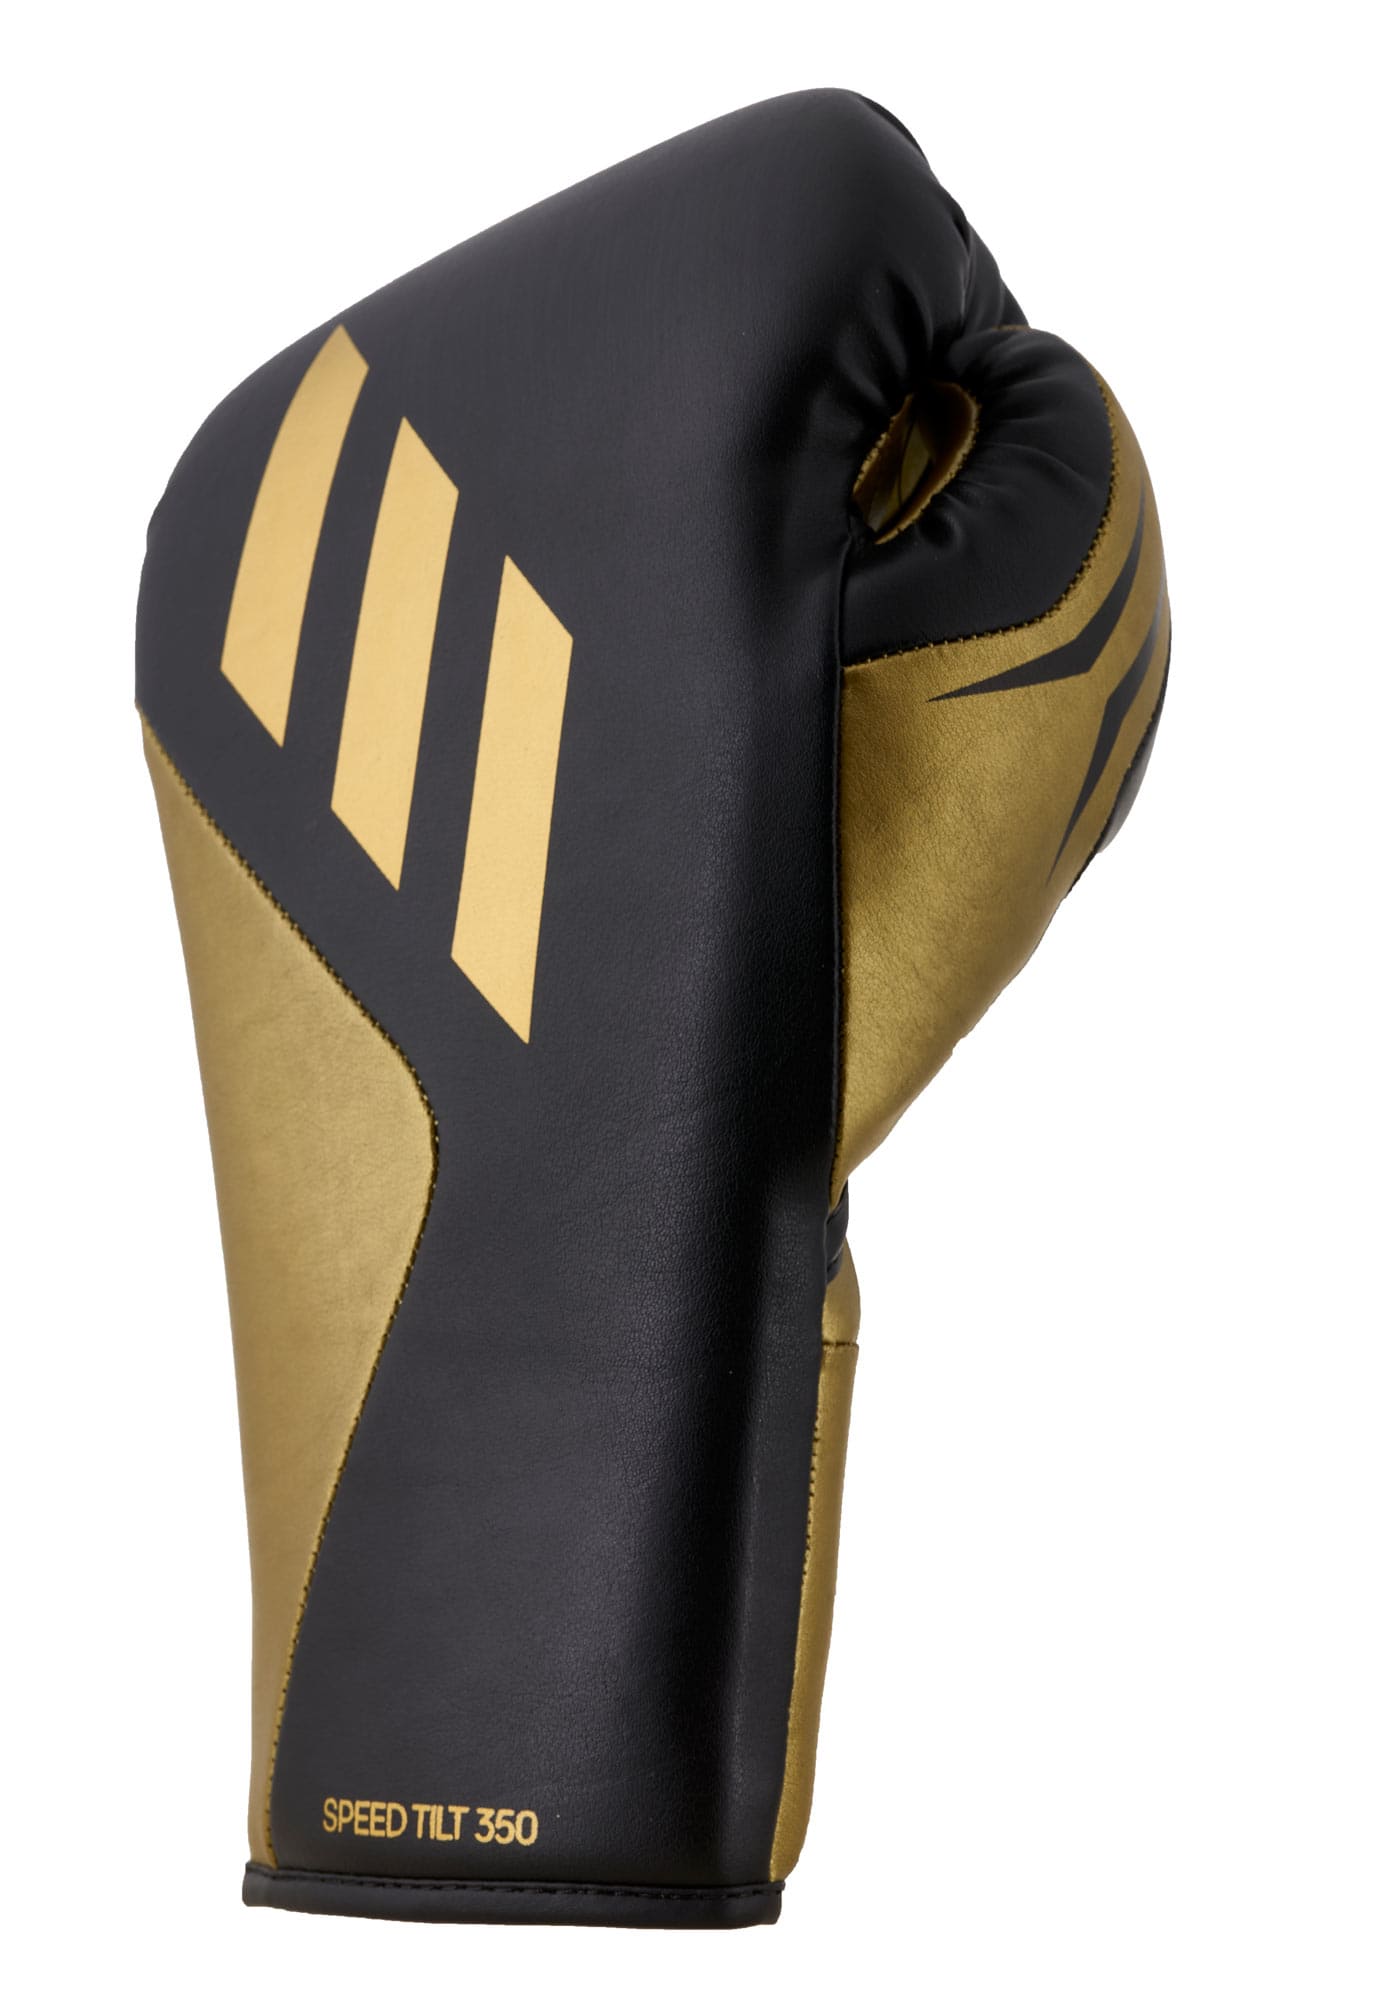 Fight Training Glove Gloves - Online emparor Pro Black/Gold ADIDAS ✓ 350 Boxing Shop Buy TILT